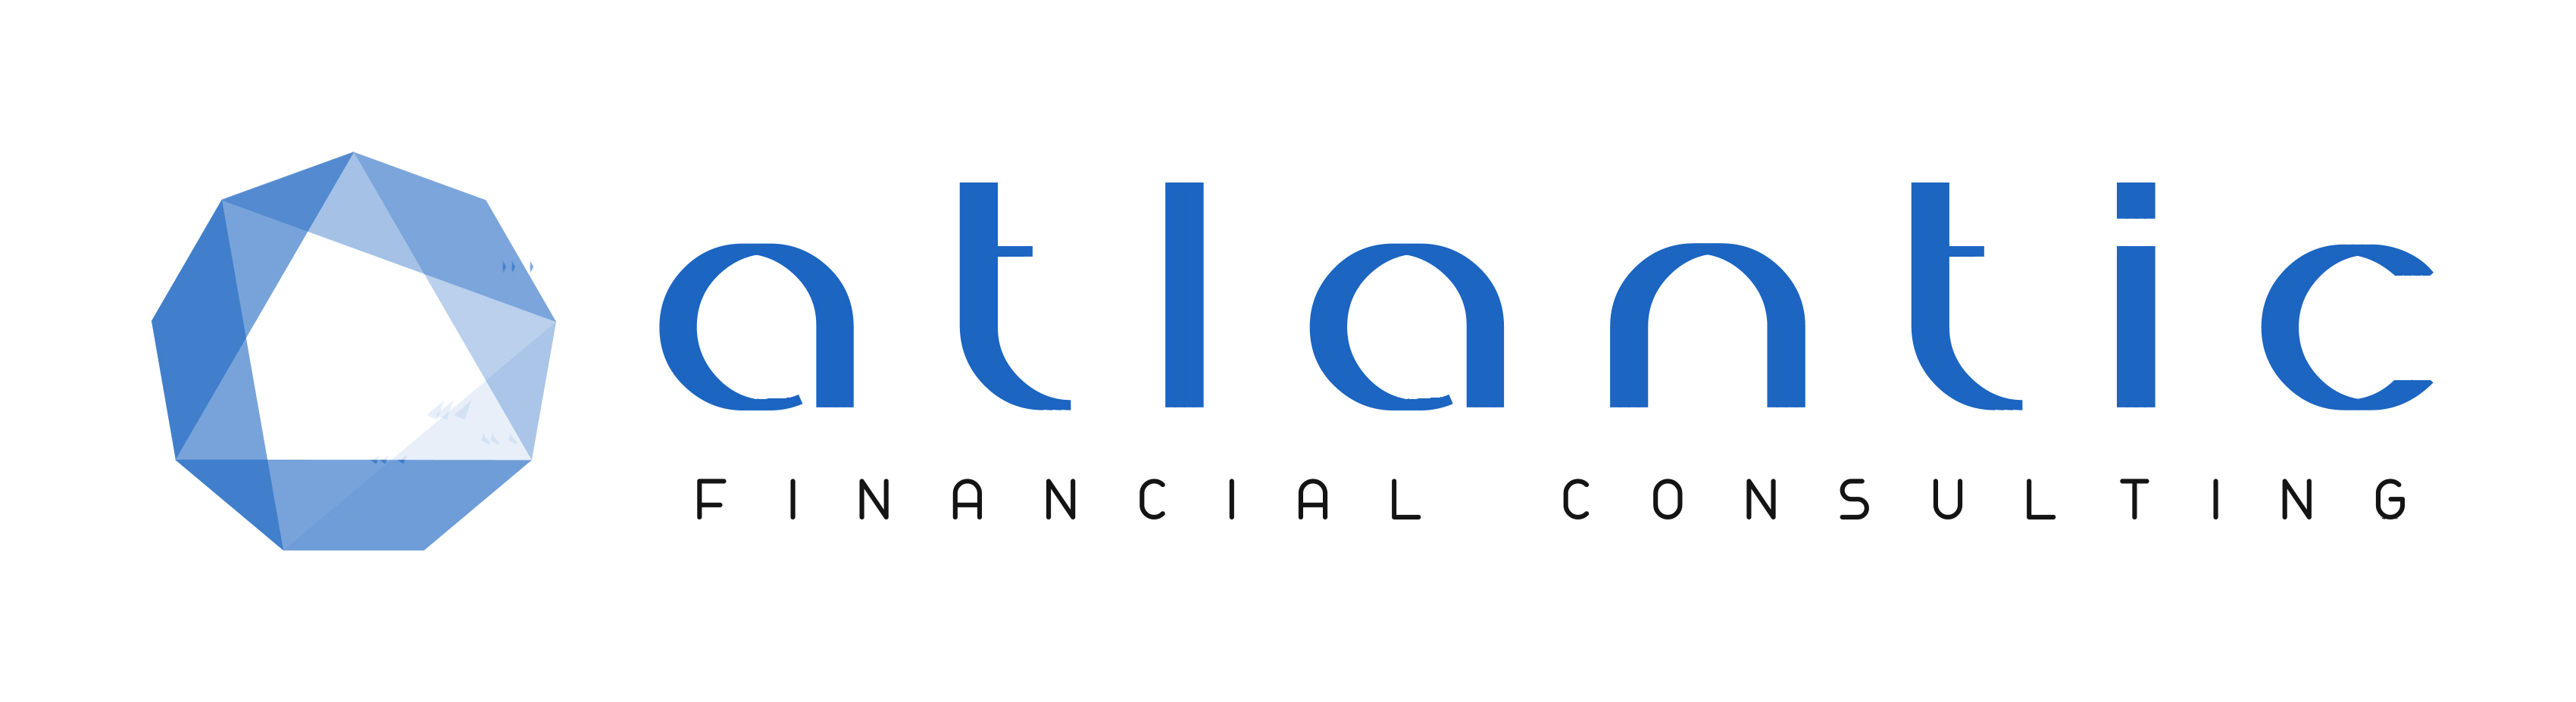 Atlantic Financial Consulting